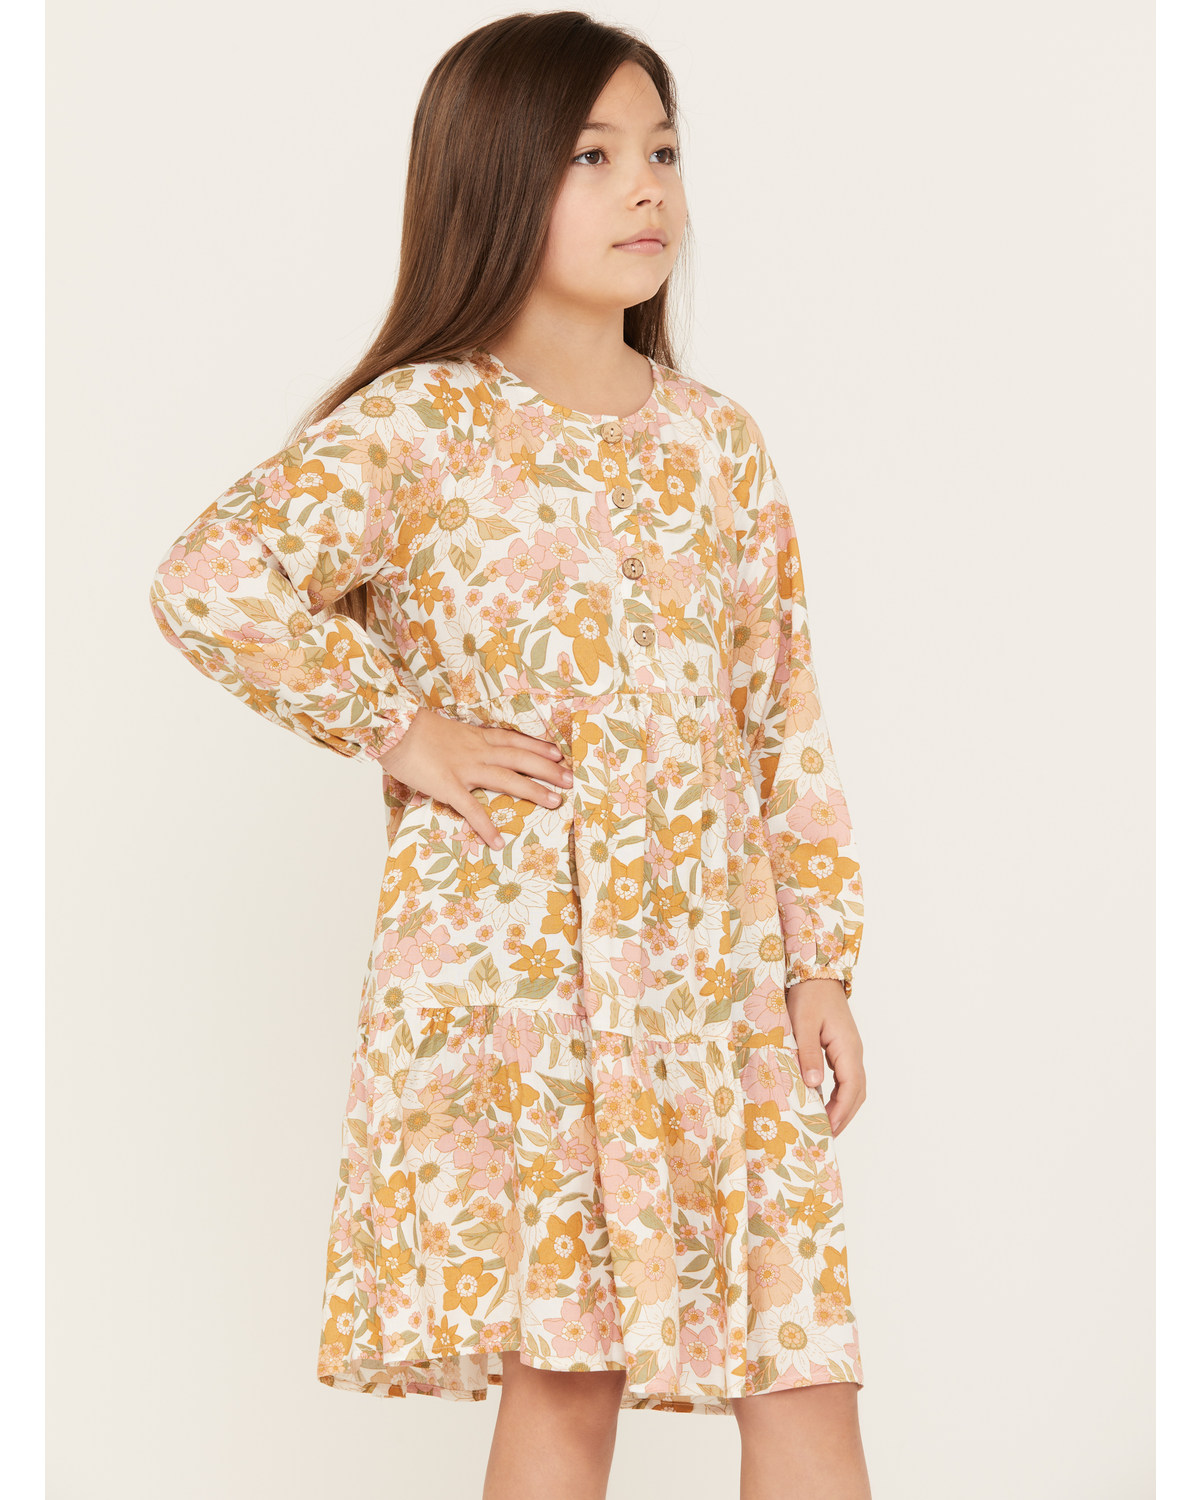 Hayden LA Girls' Floral Mini Dress